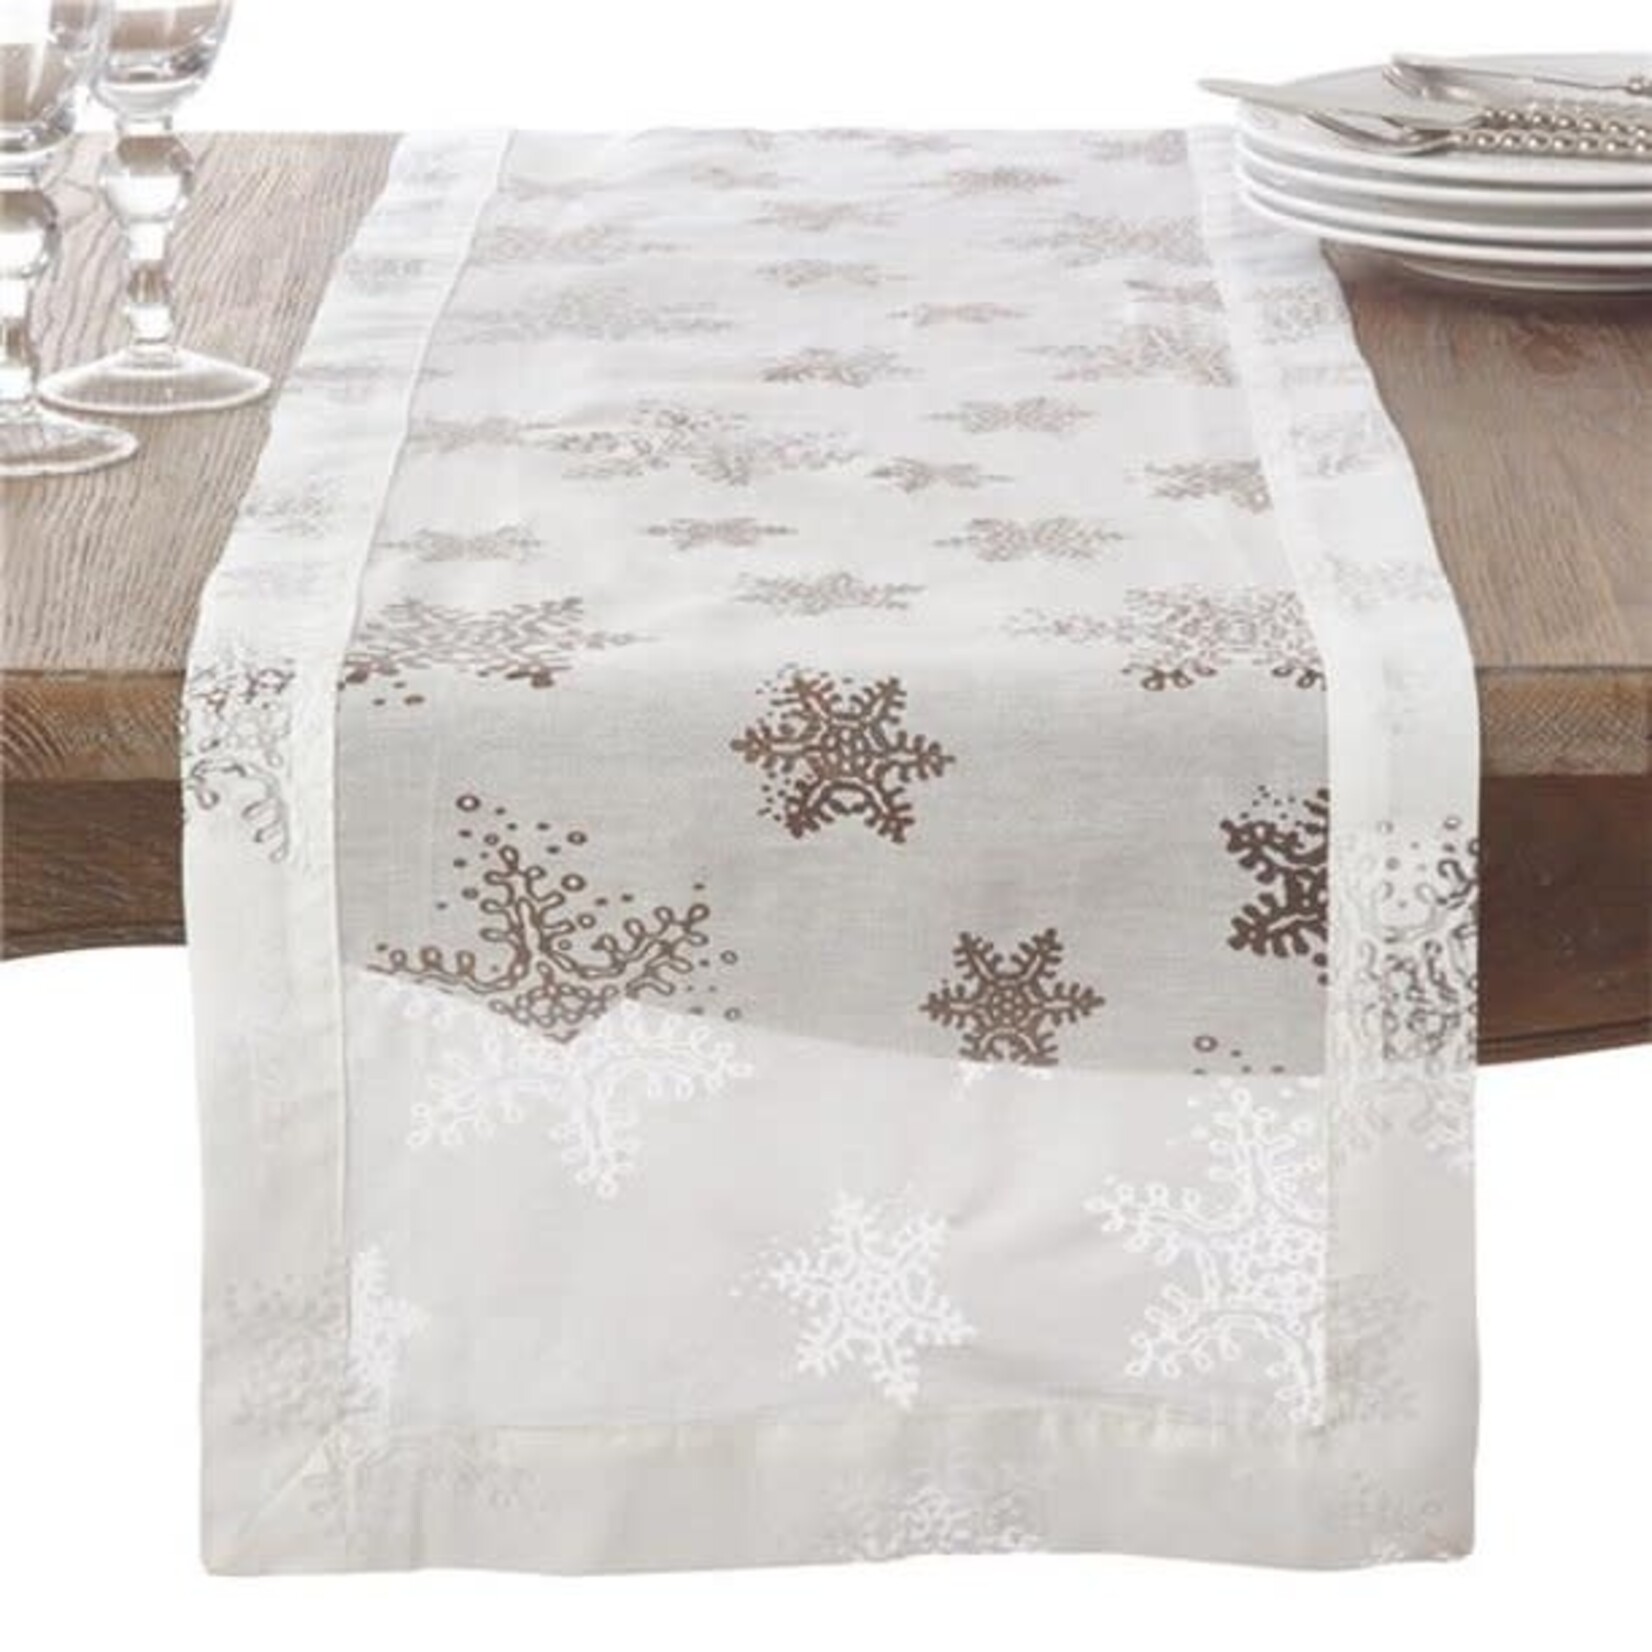 Saro Trading Company Burnout Snowflake Design Tablecloth Runner